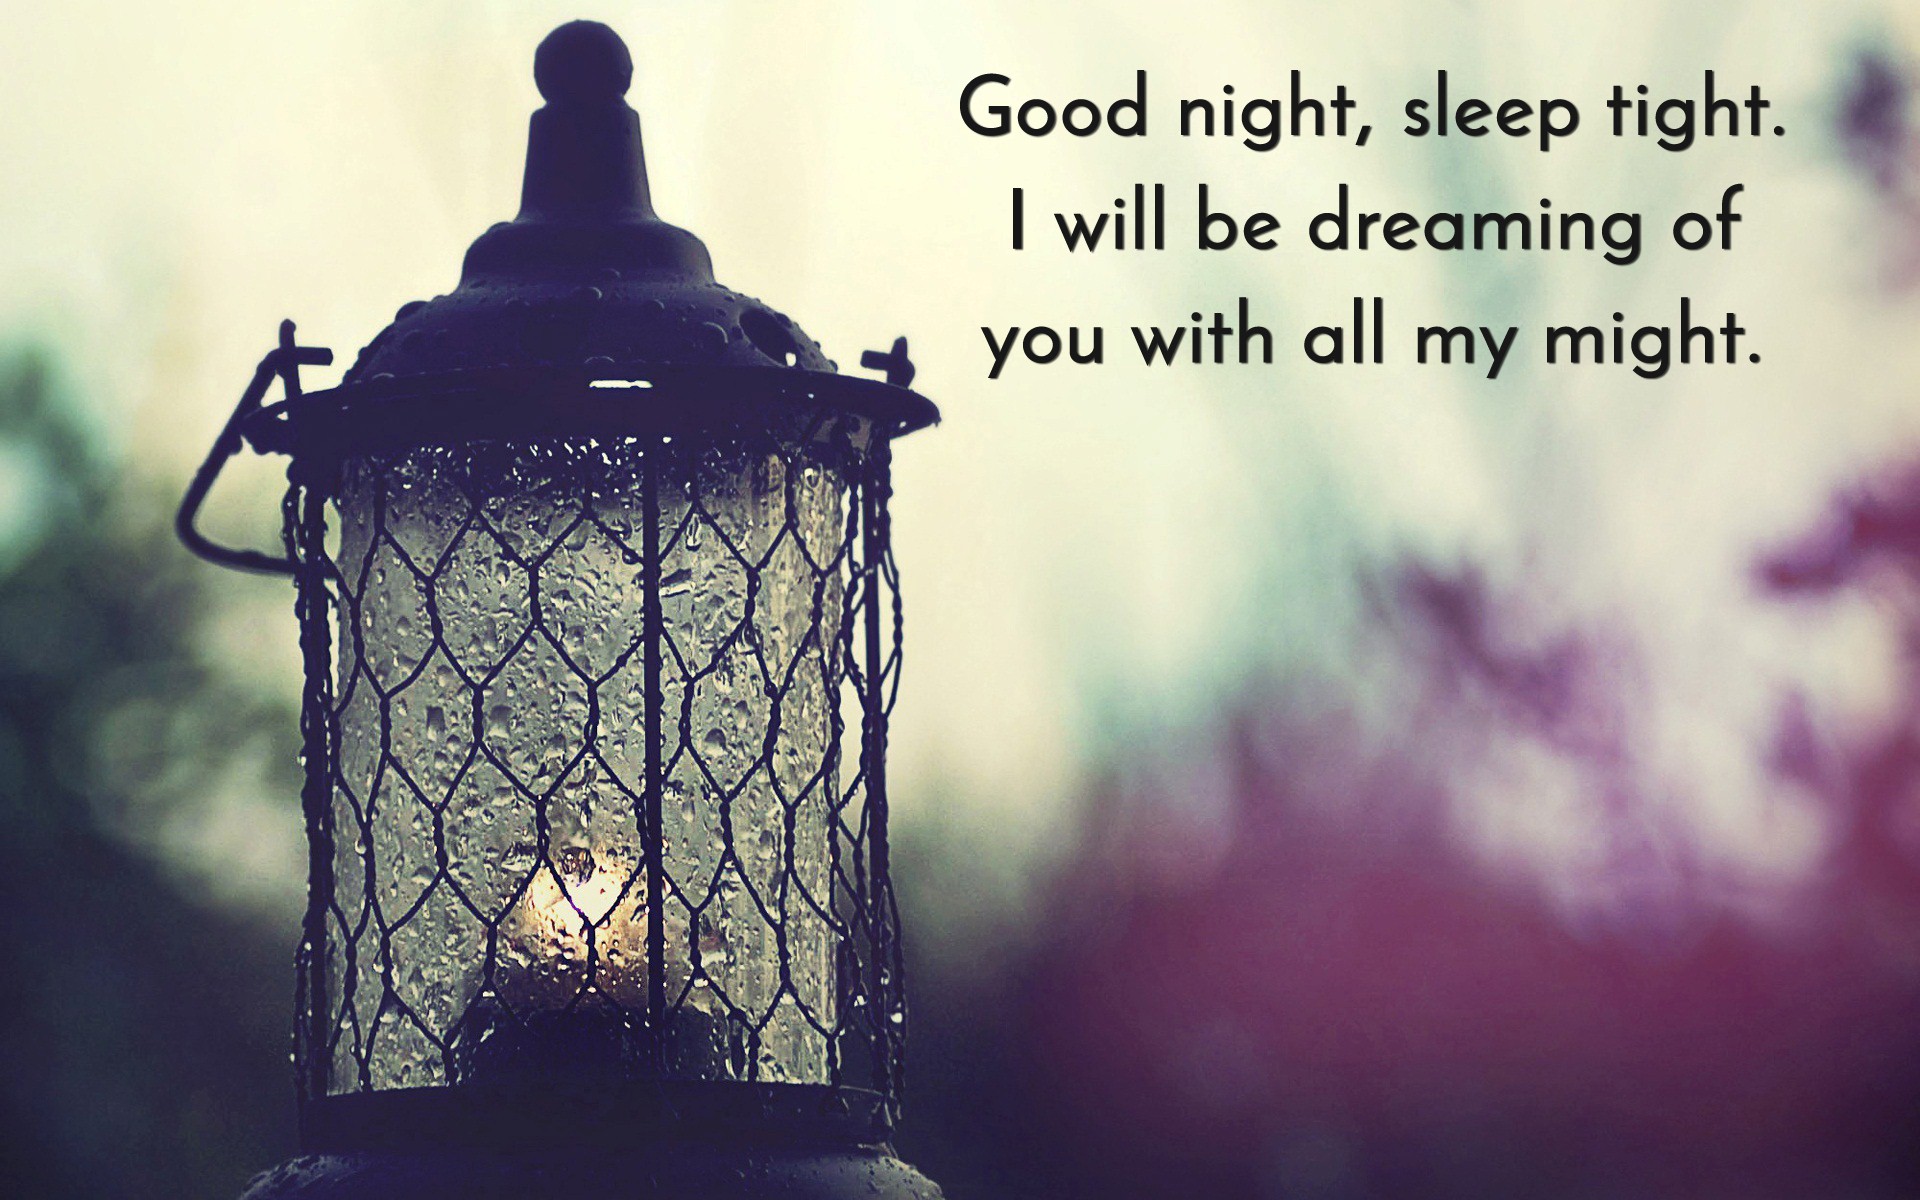 Good Night Sleep Tight Thought Wallpaper - Good Night Sleep Thought - HD Wallpaper 